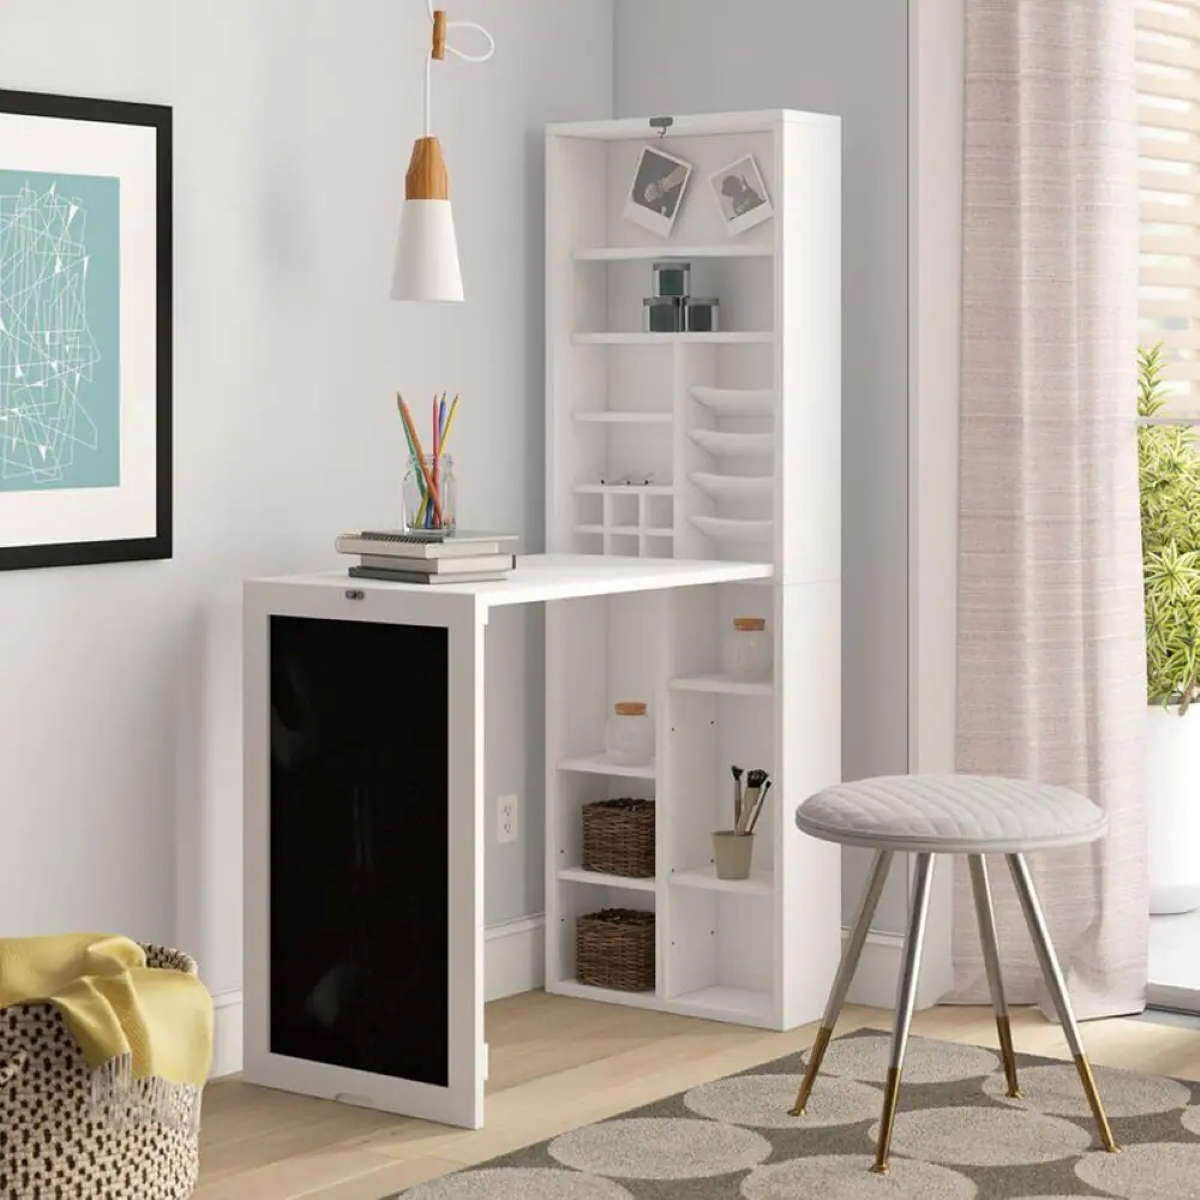 apartment decor ideas - foldable desk